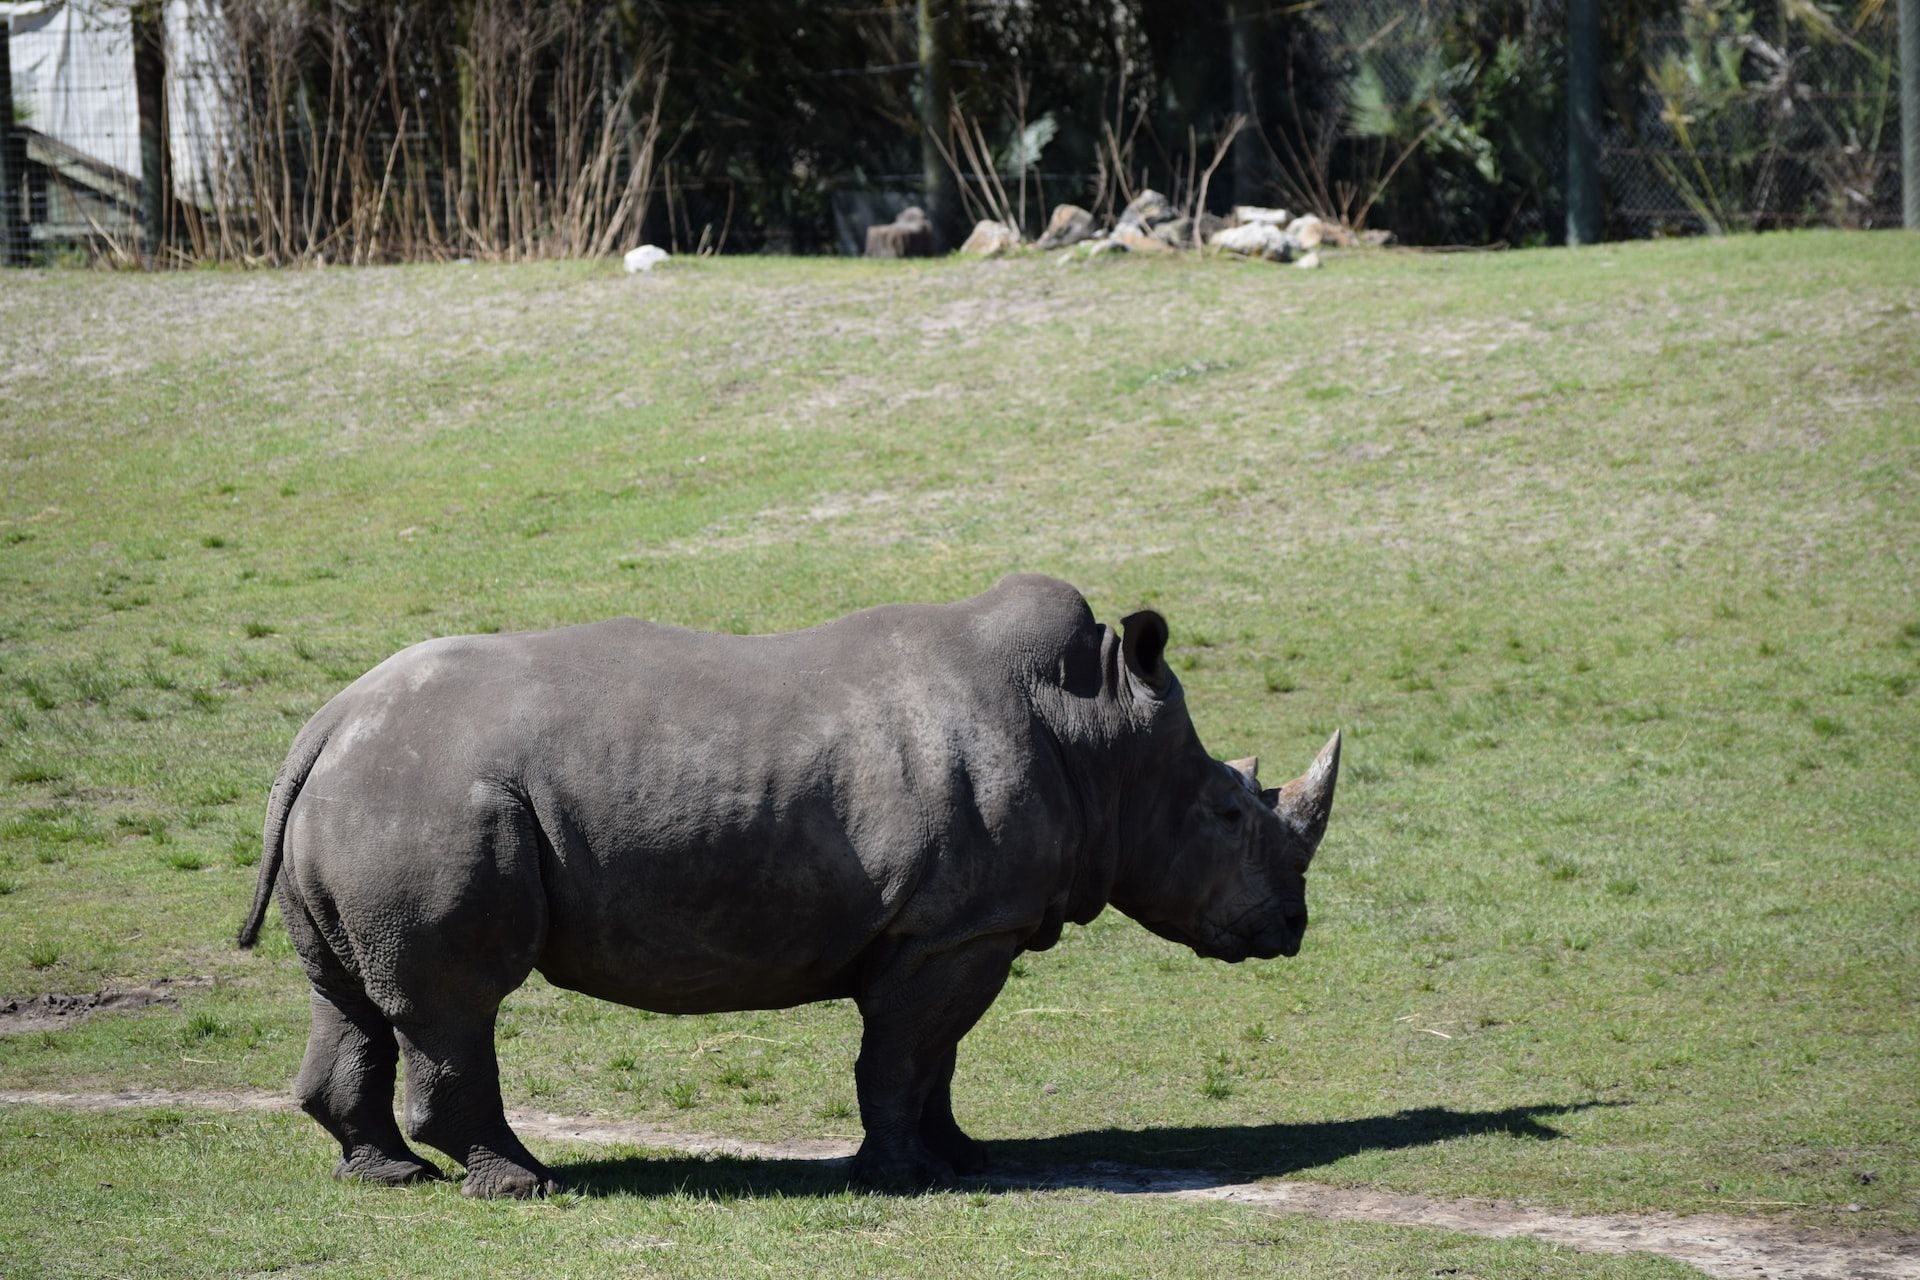 Rhino at Jacksonville Zoo and Gardens